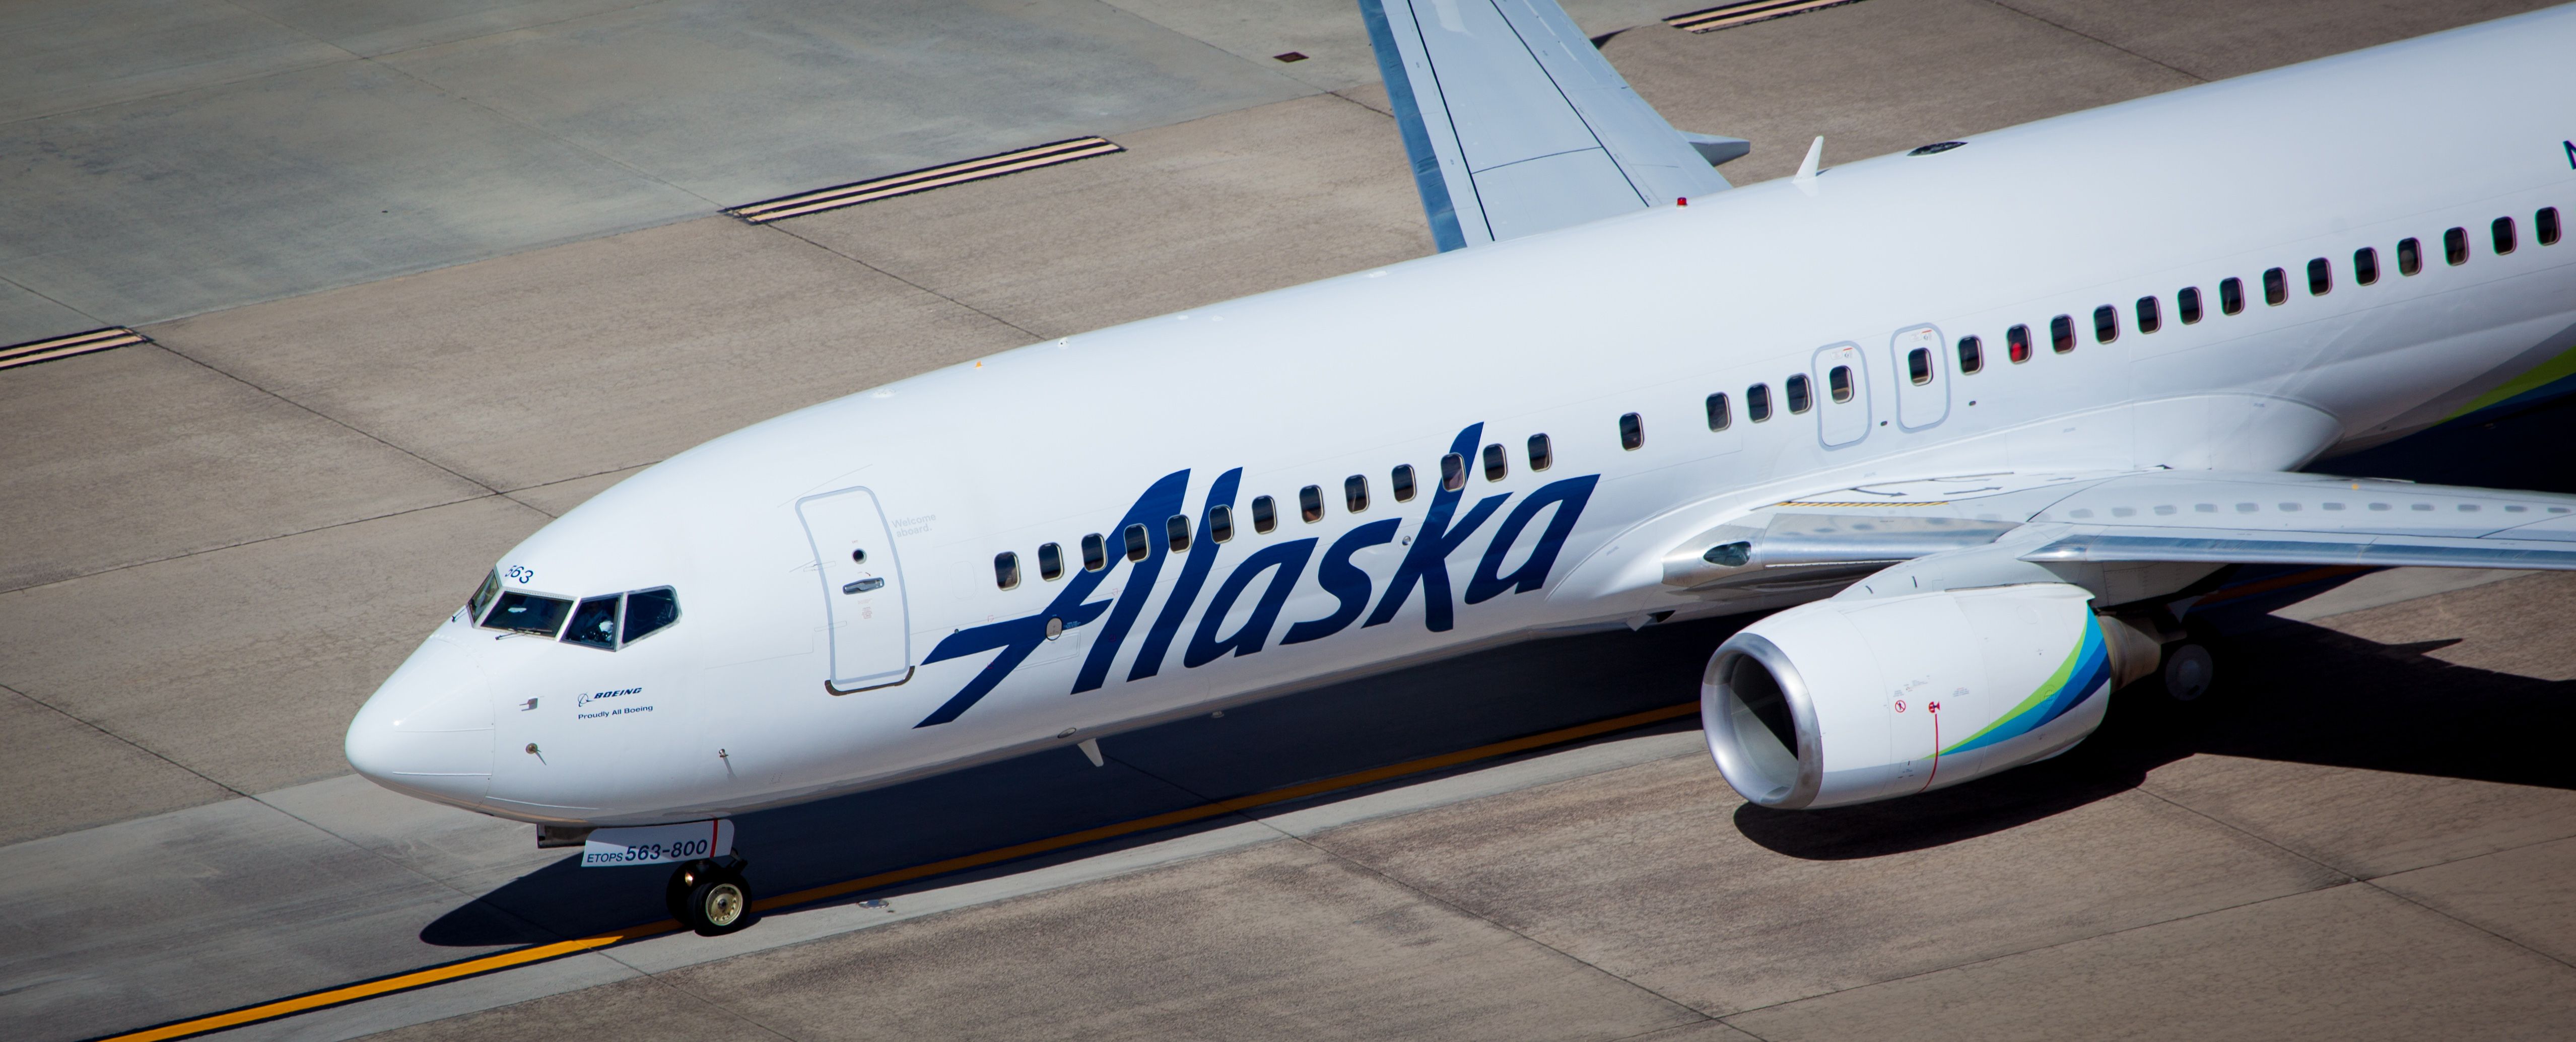 Denver International Airport Alaska Airlines